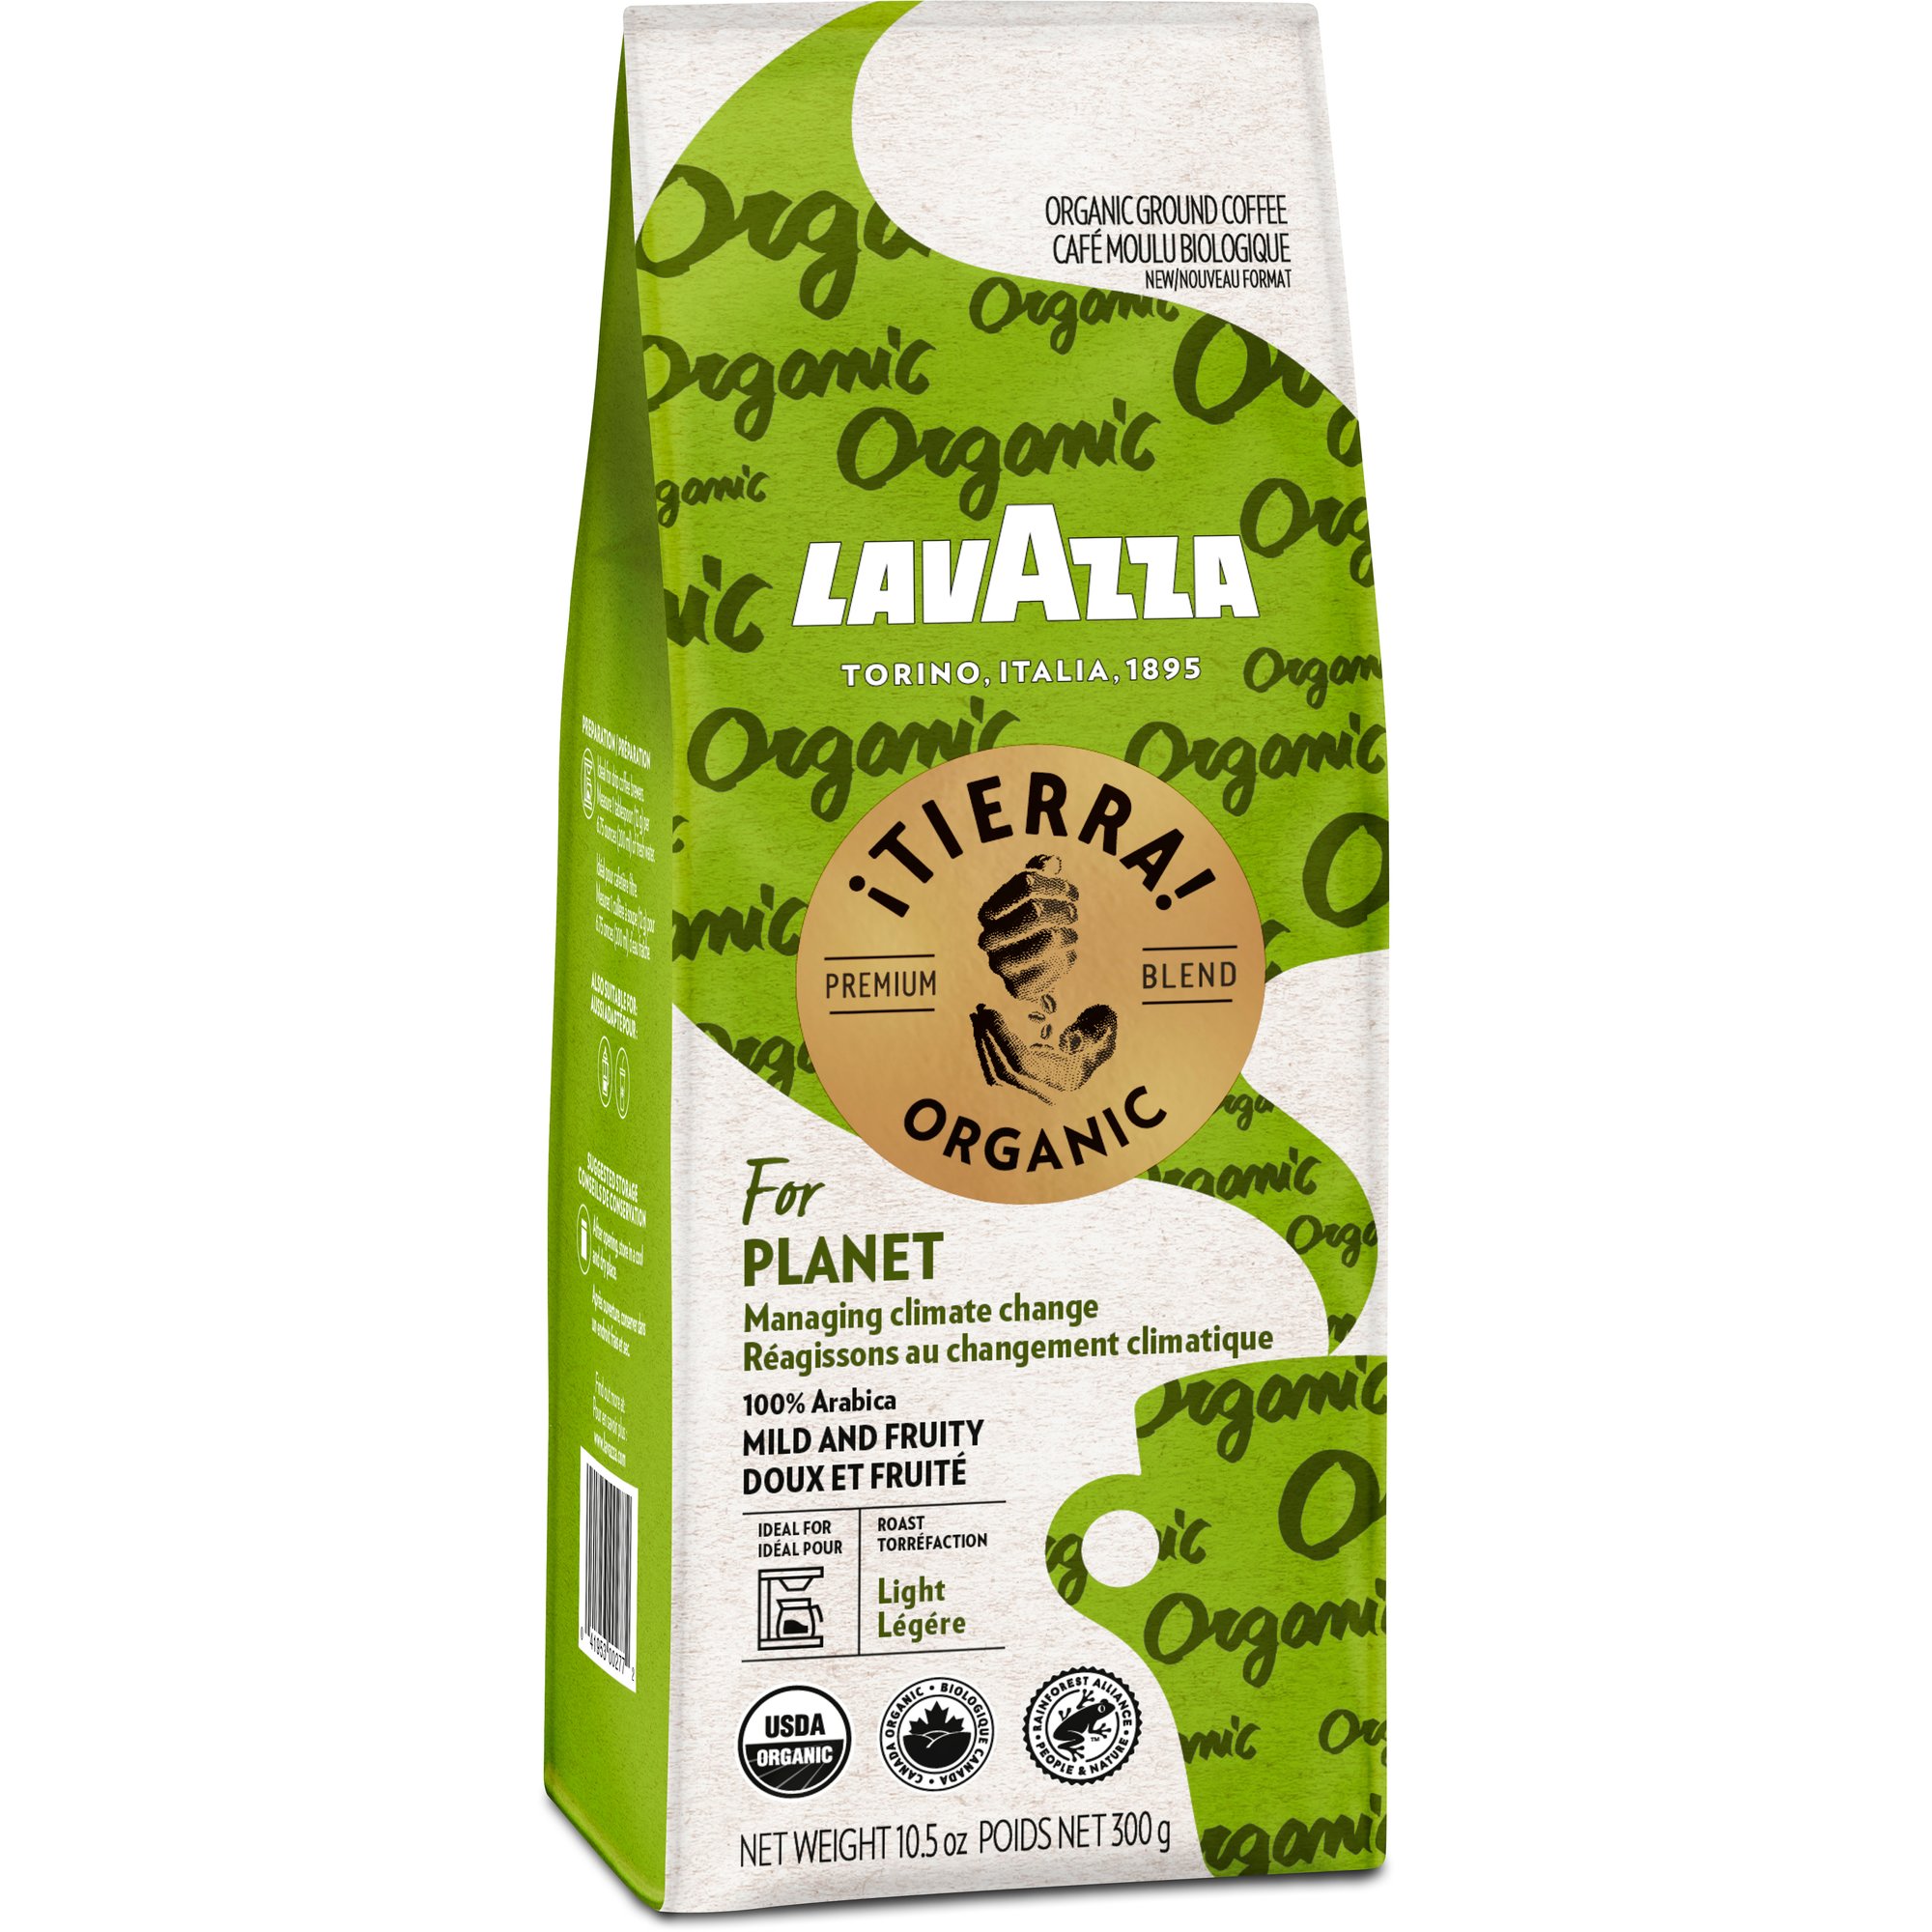 Lavazza Â¡Tierra! For Planet Organic filterkaffe, 300 g